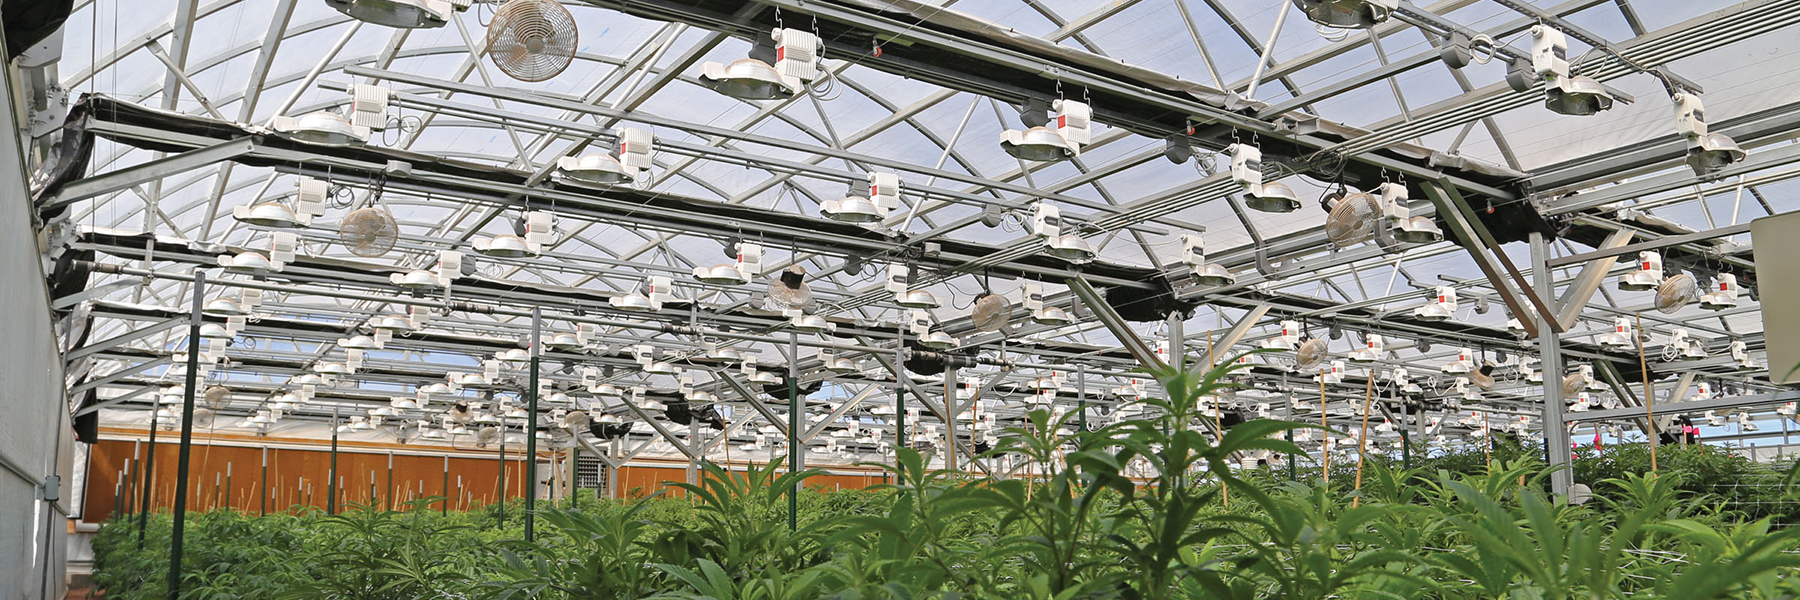 cannabis greenhouse lights